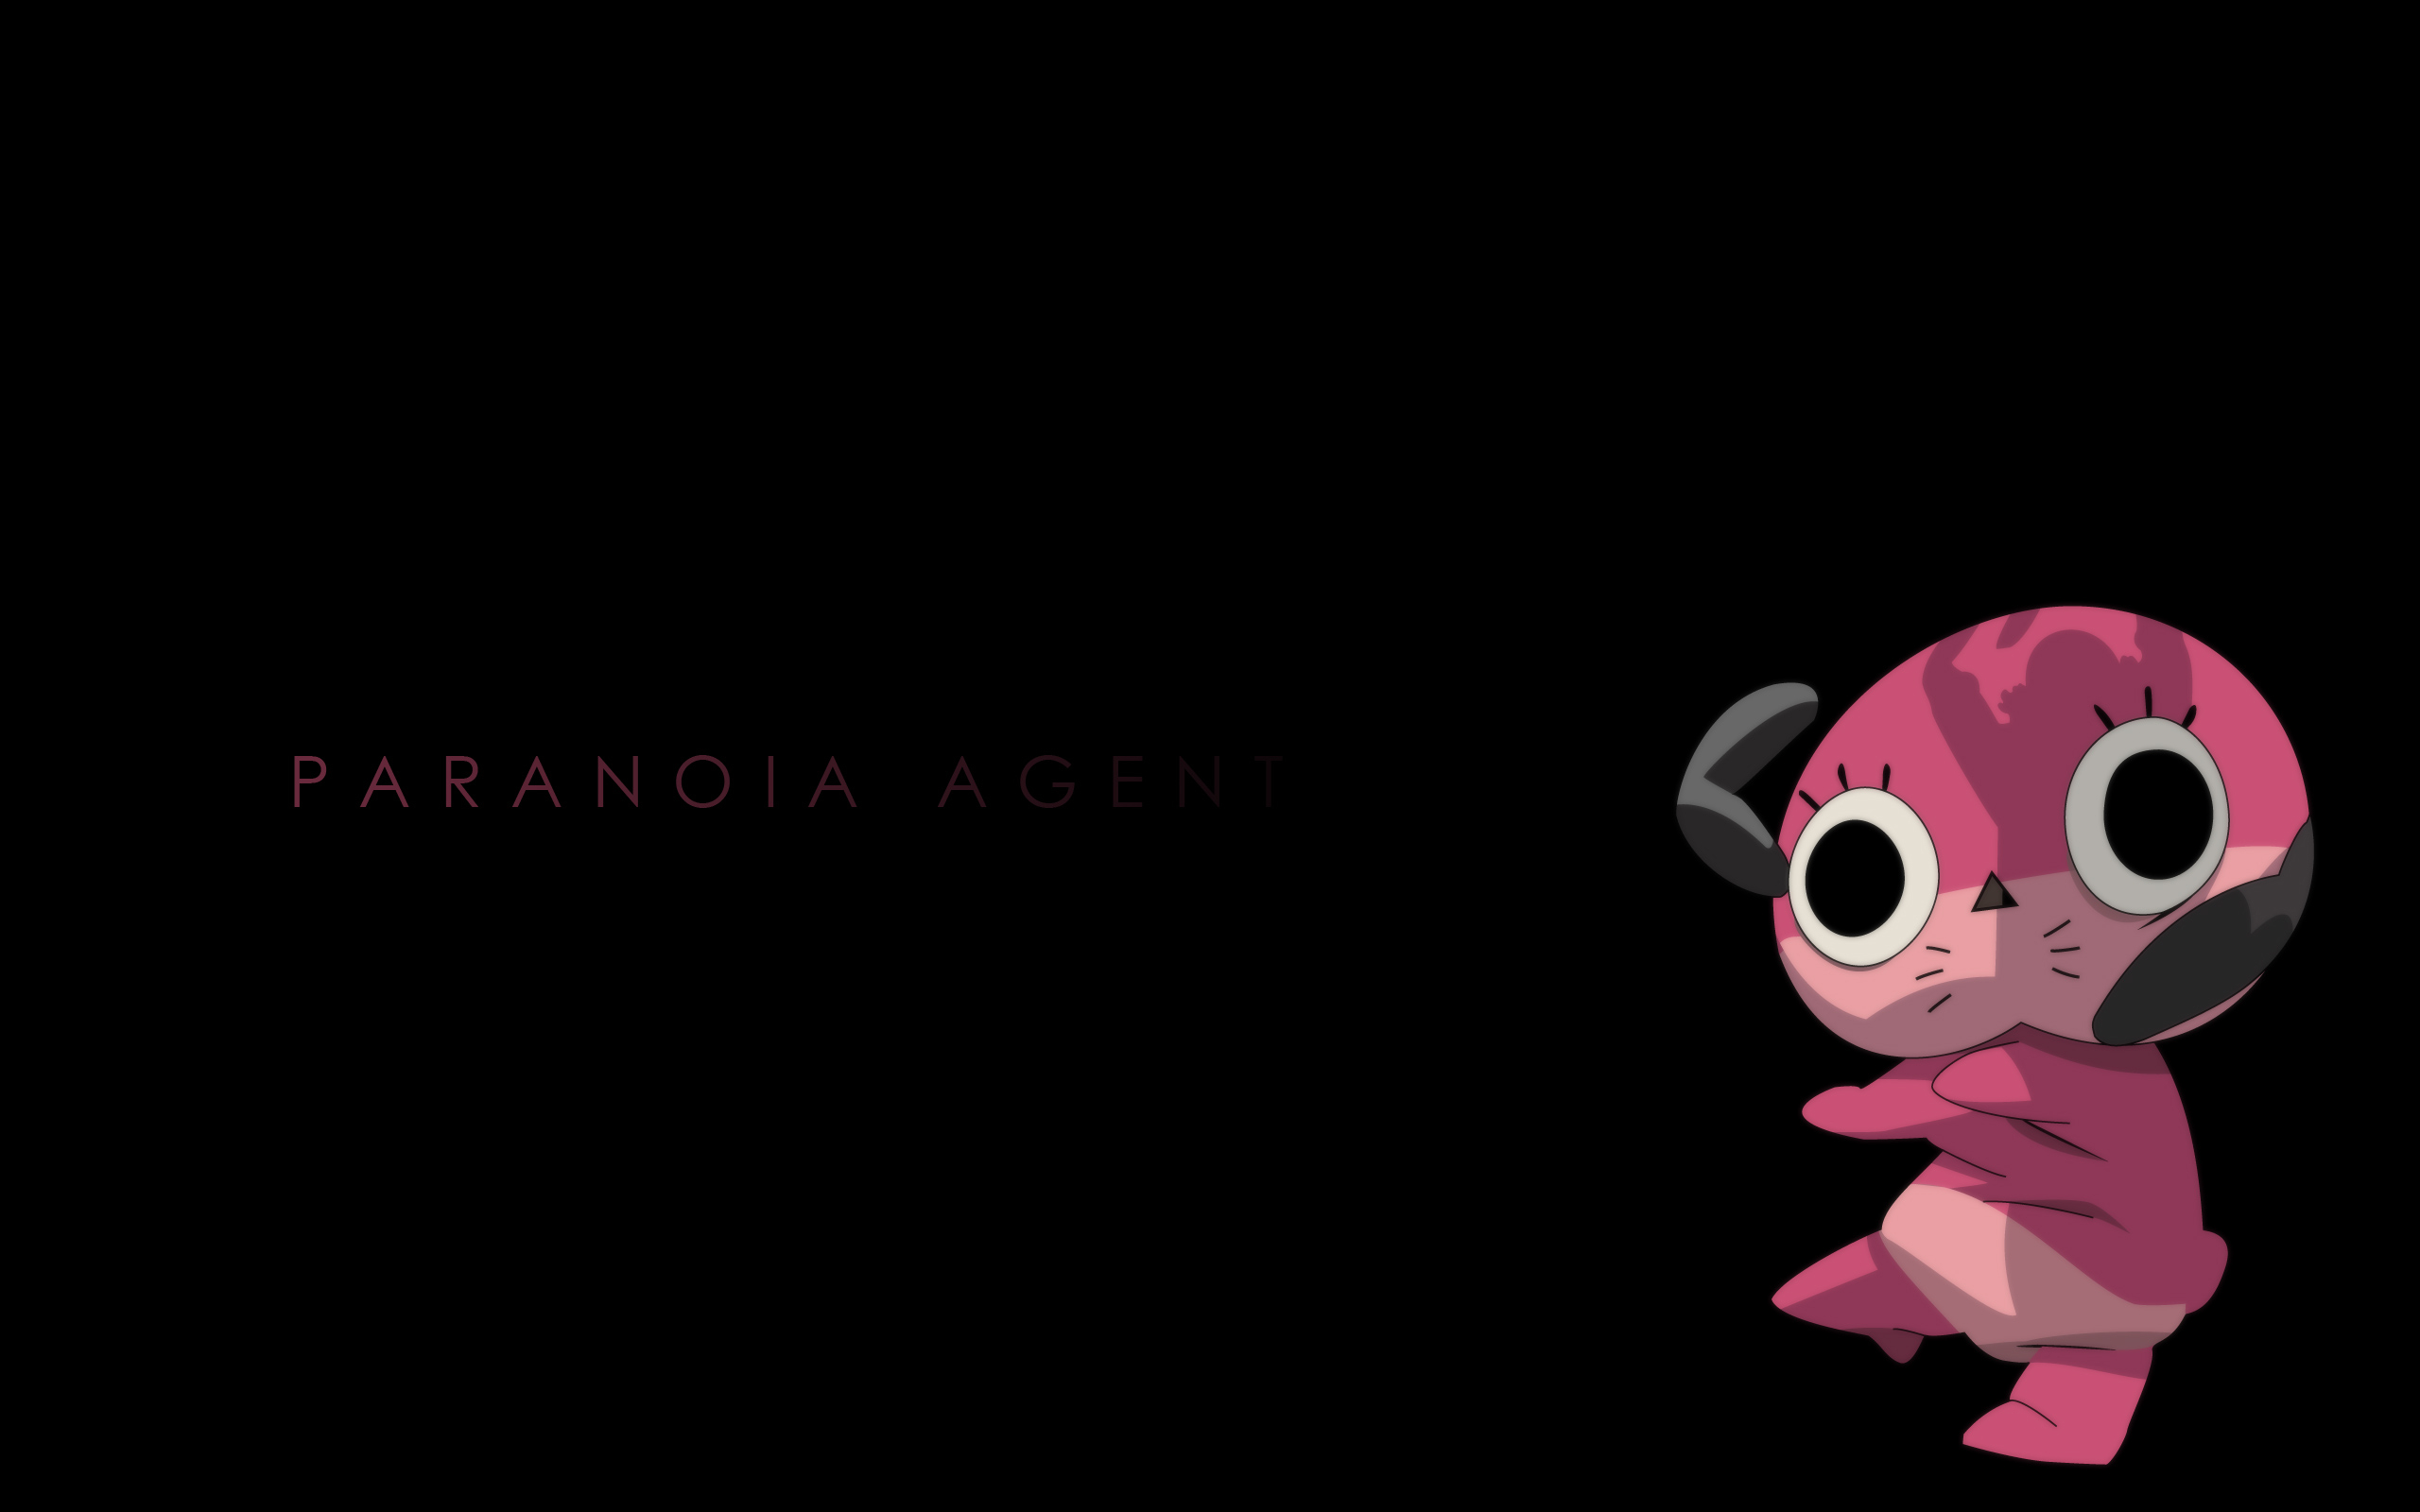 paranoia-agent